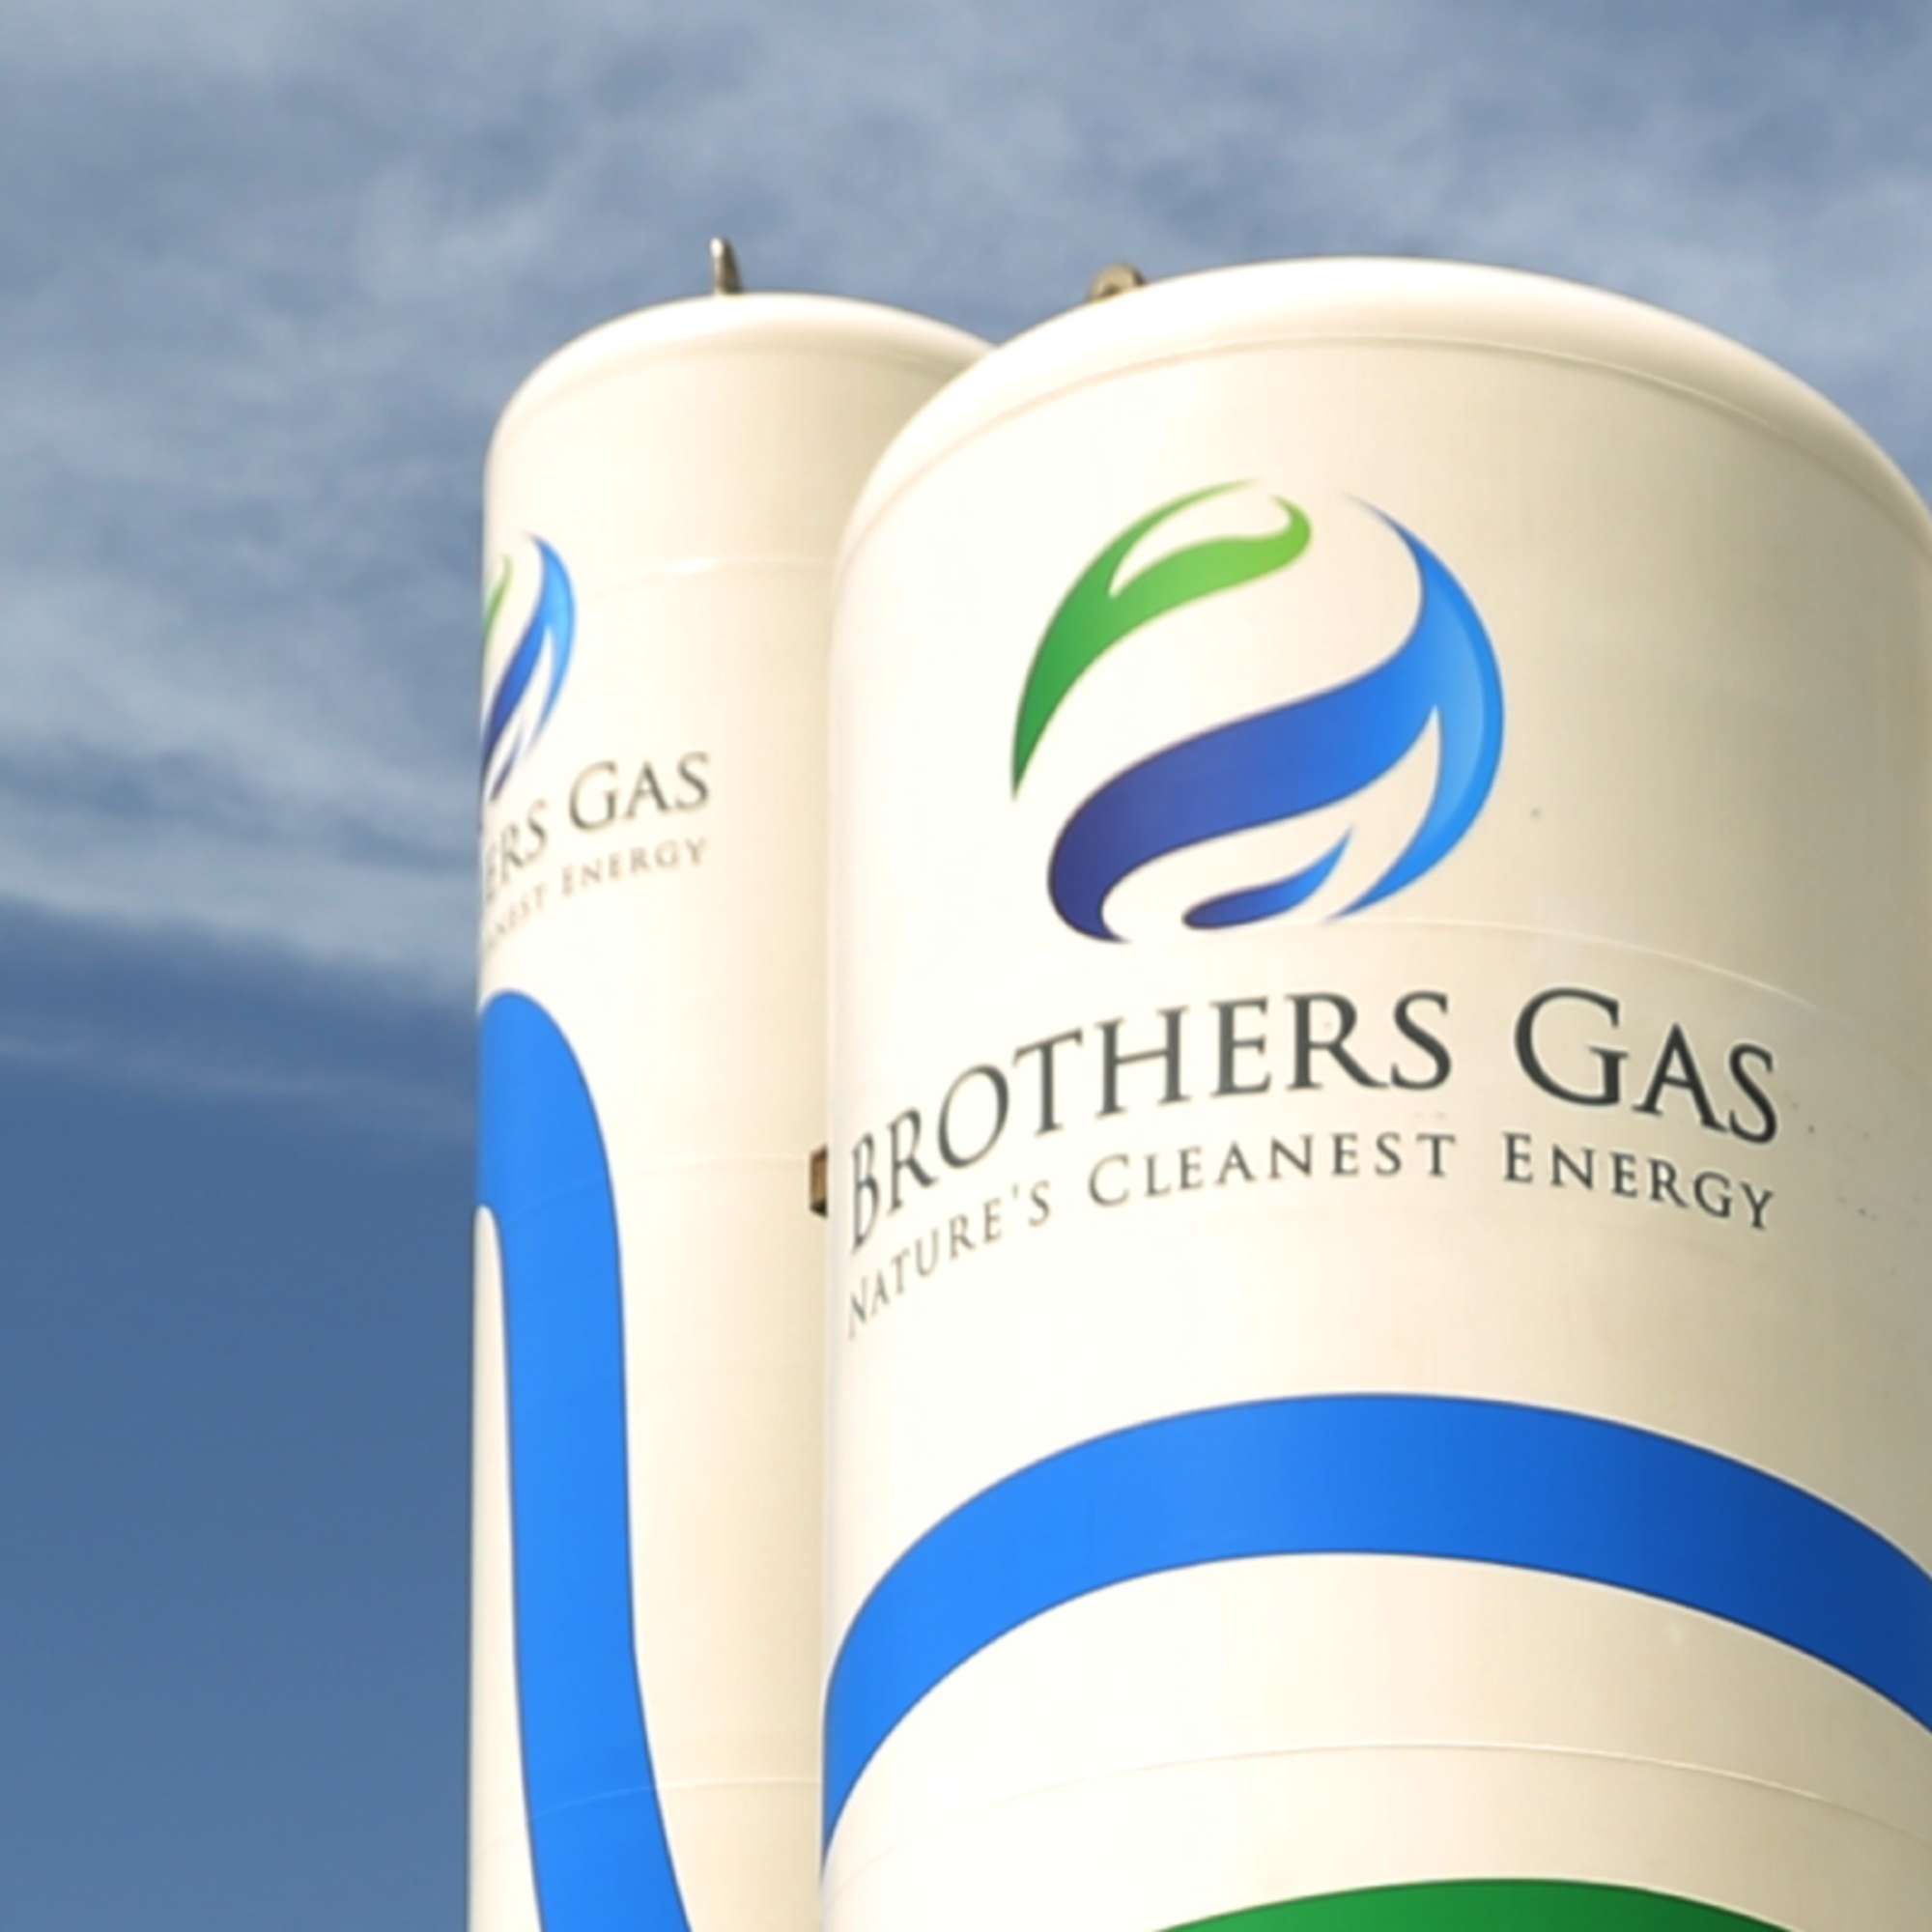 Lpg Gas Suppliers